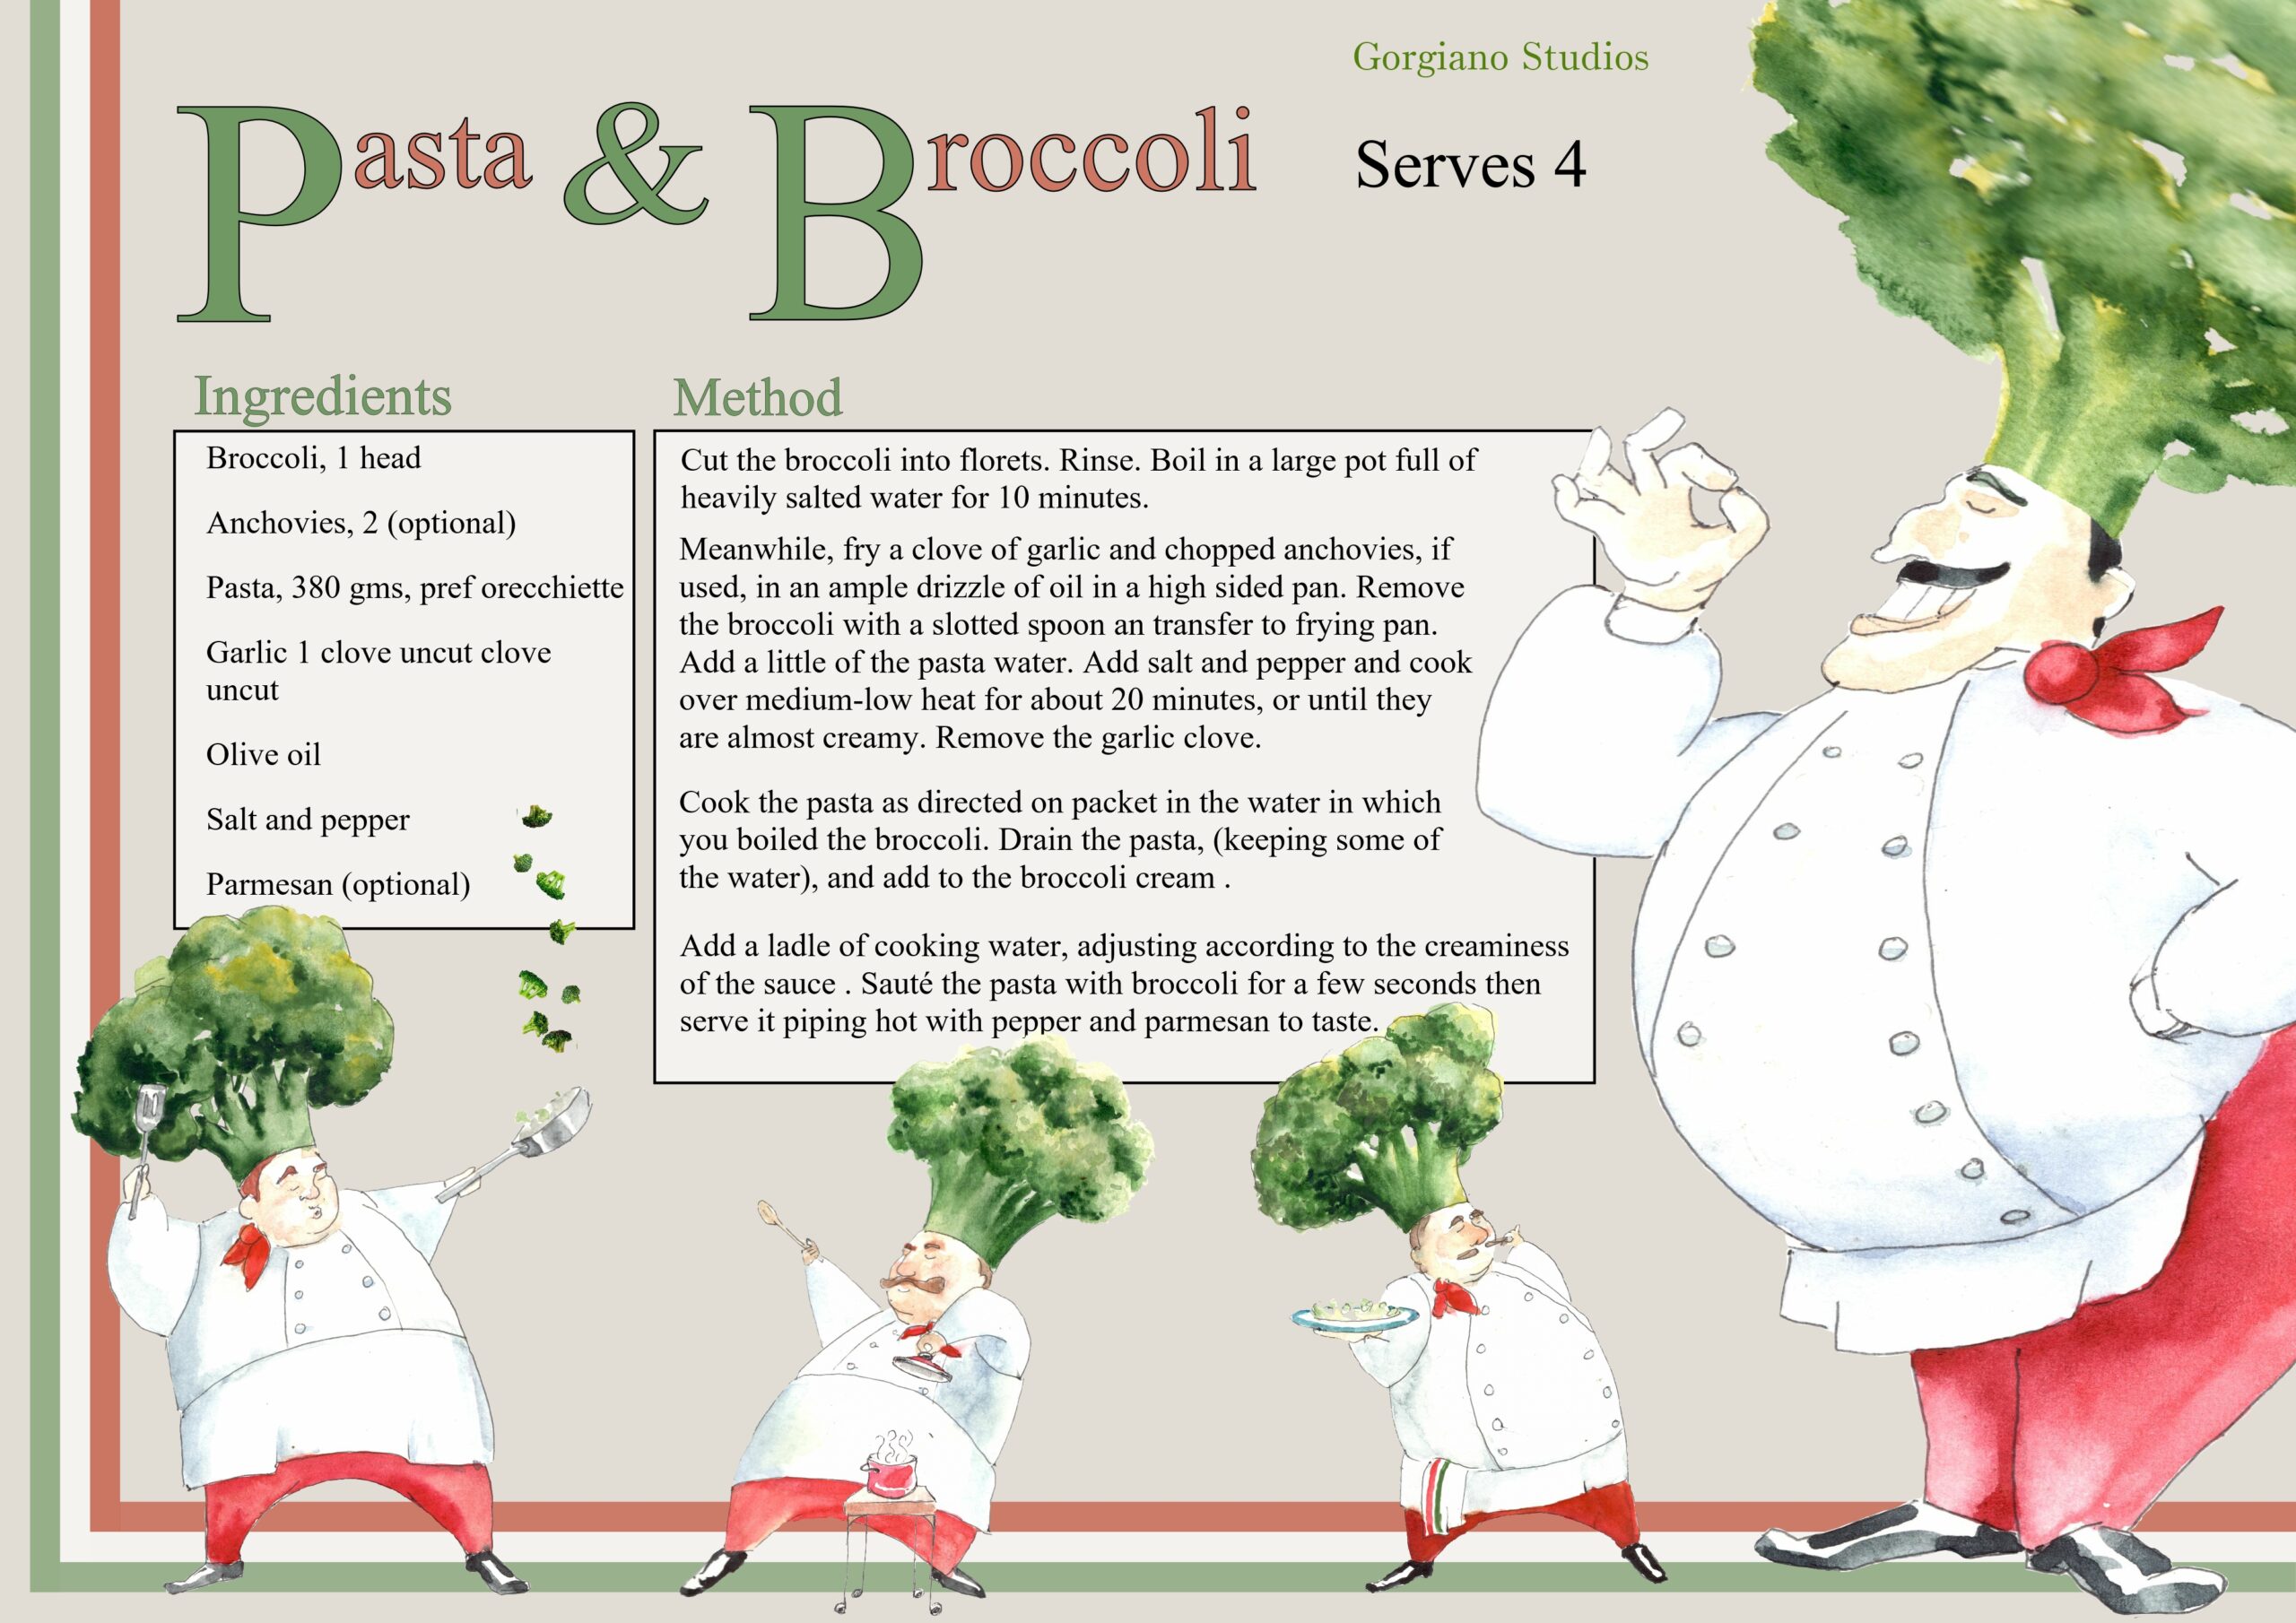 Recipe for pasta broccoli from Gorgiano Studios and Andreas authentic Italian cuisine